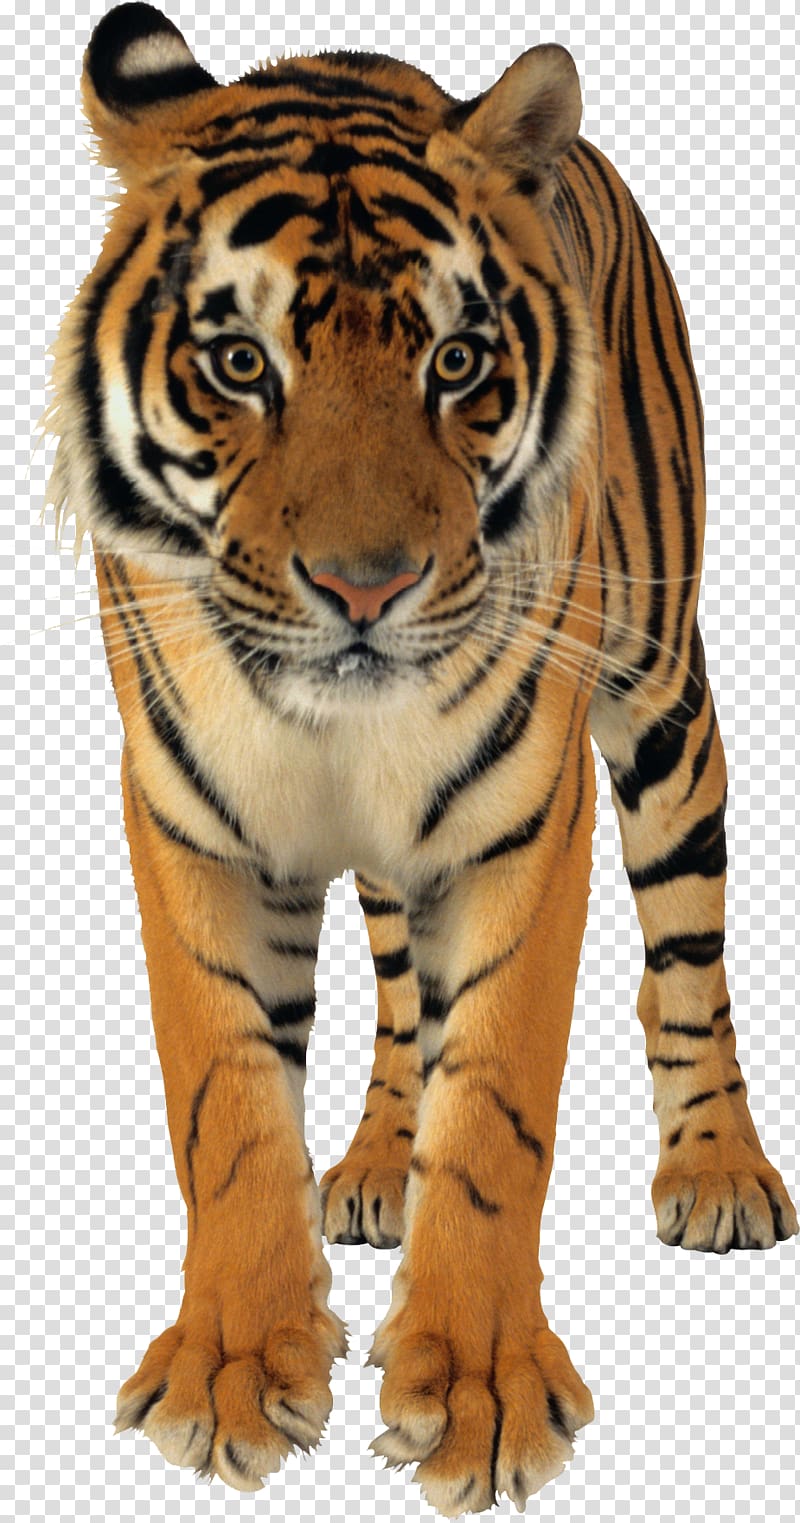 Bengal tiger Lion White tiger, tiger transparent background PNG clipart